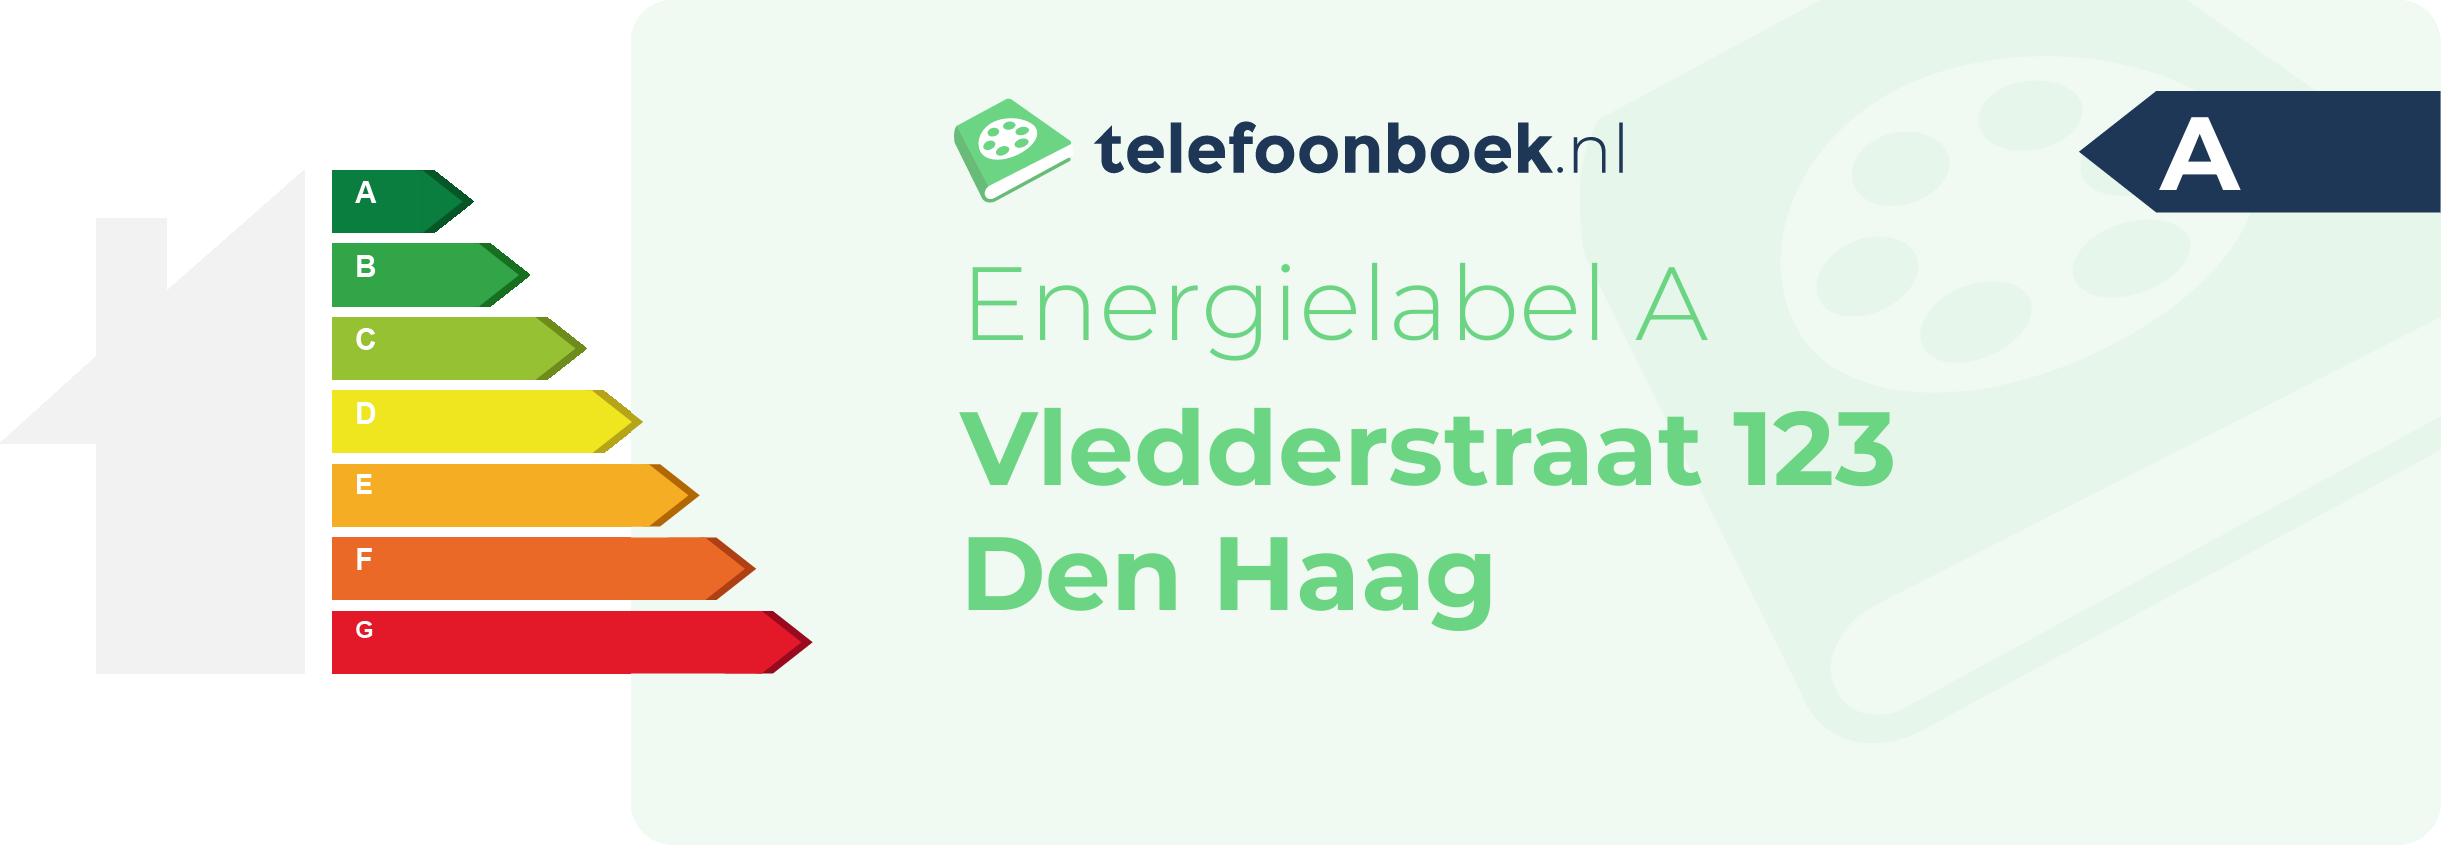 Energielabel Vledderstraat 123 Den Haag